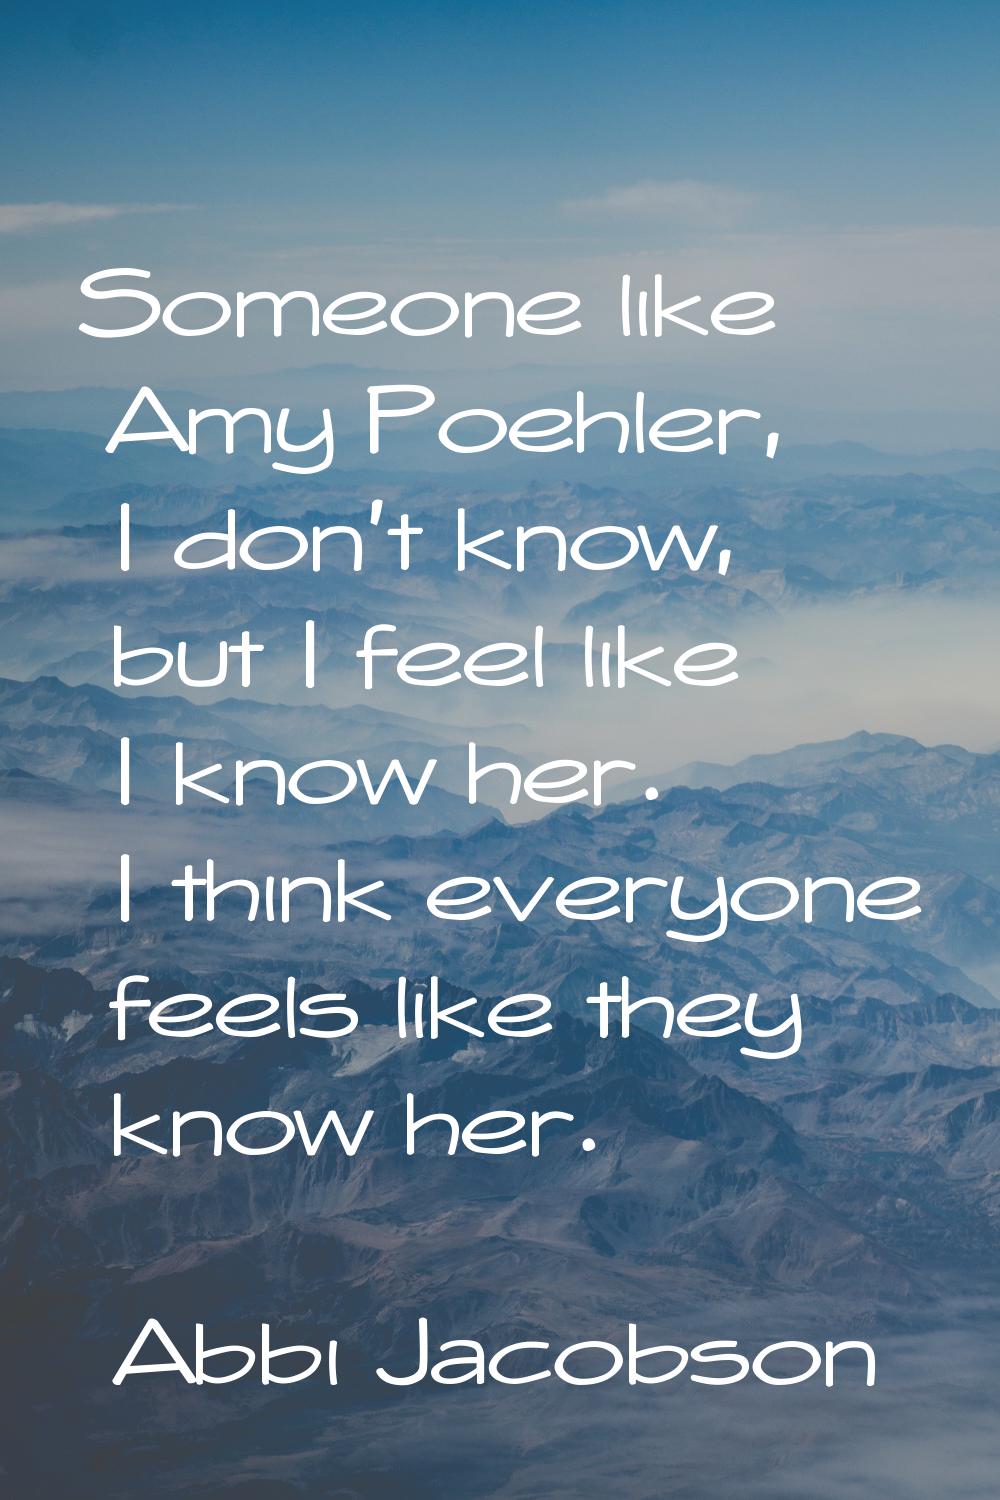 Someone like Amy Poehler, I don't know, but I feel like I know her. I think everyone feels like the